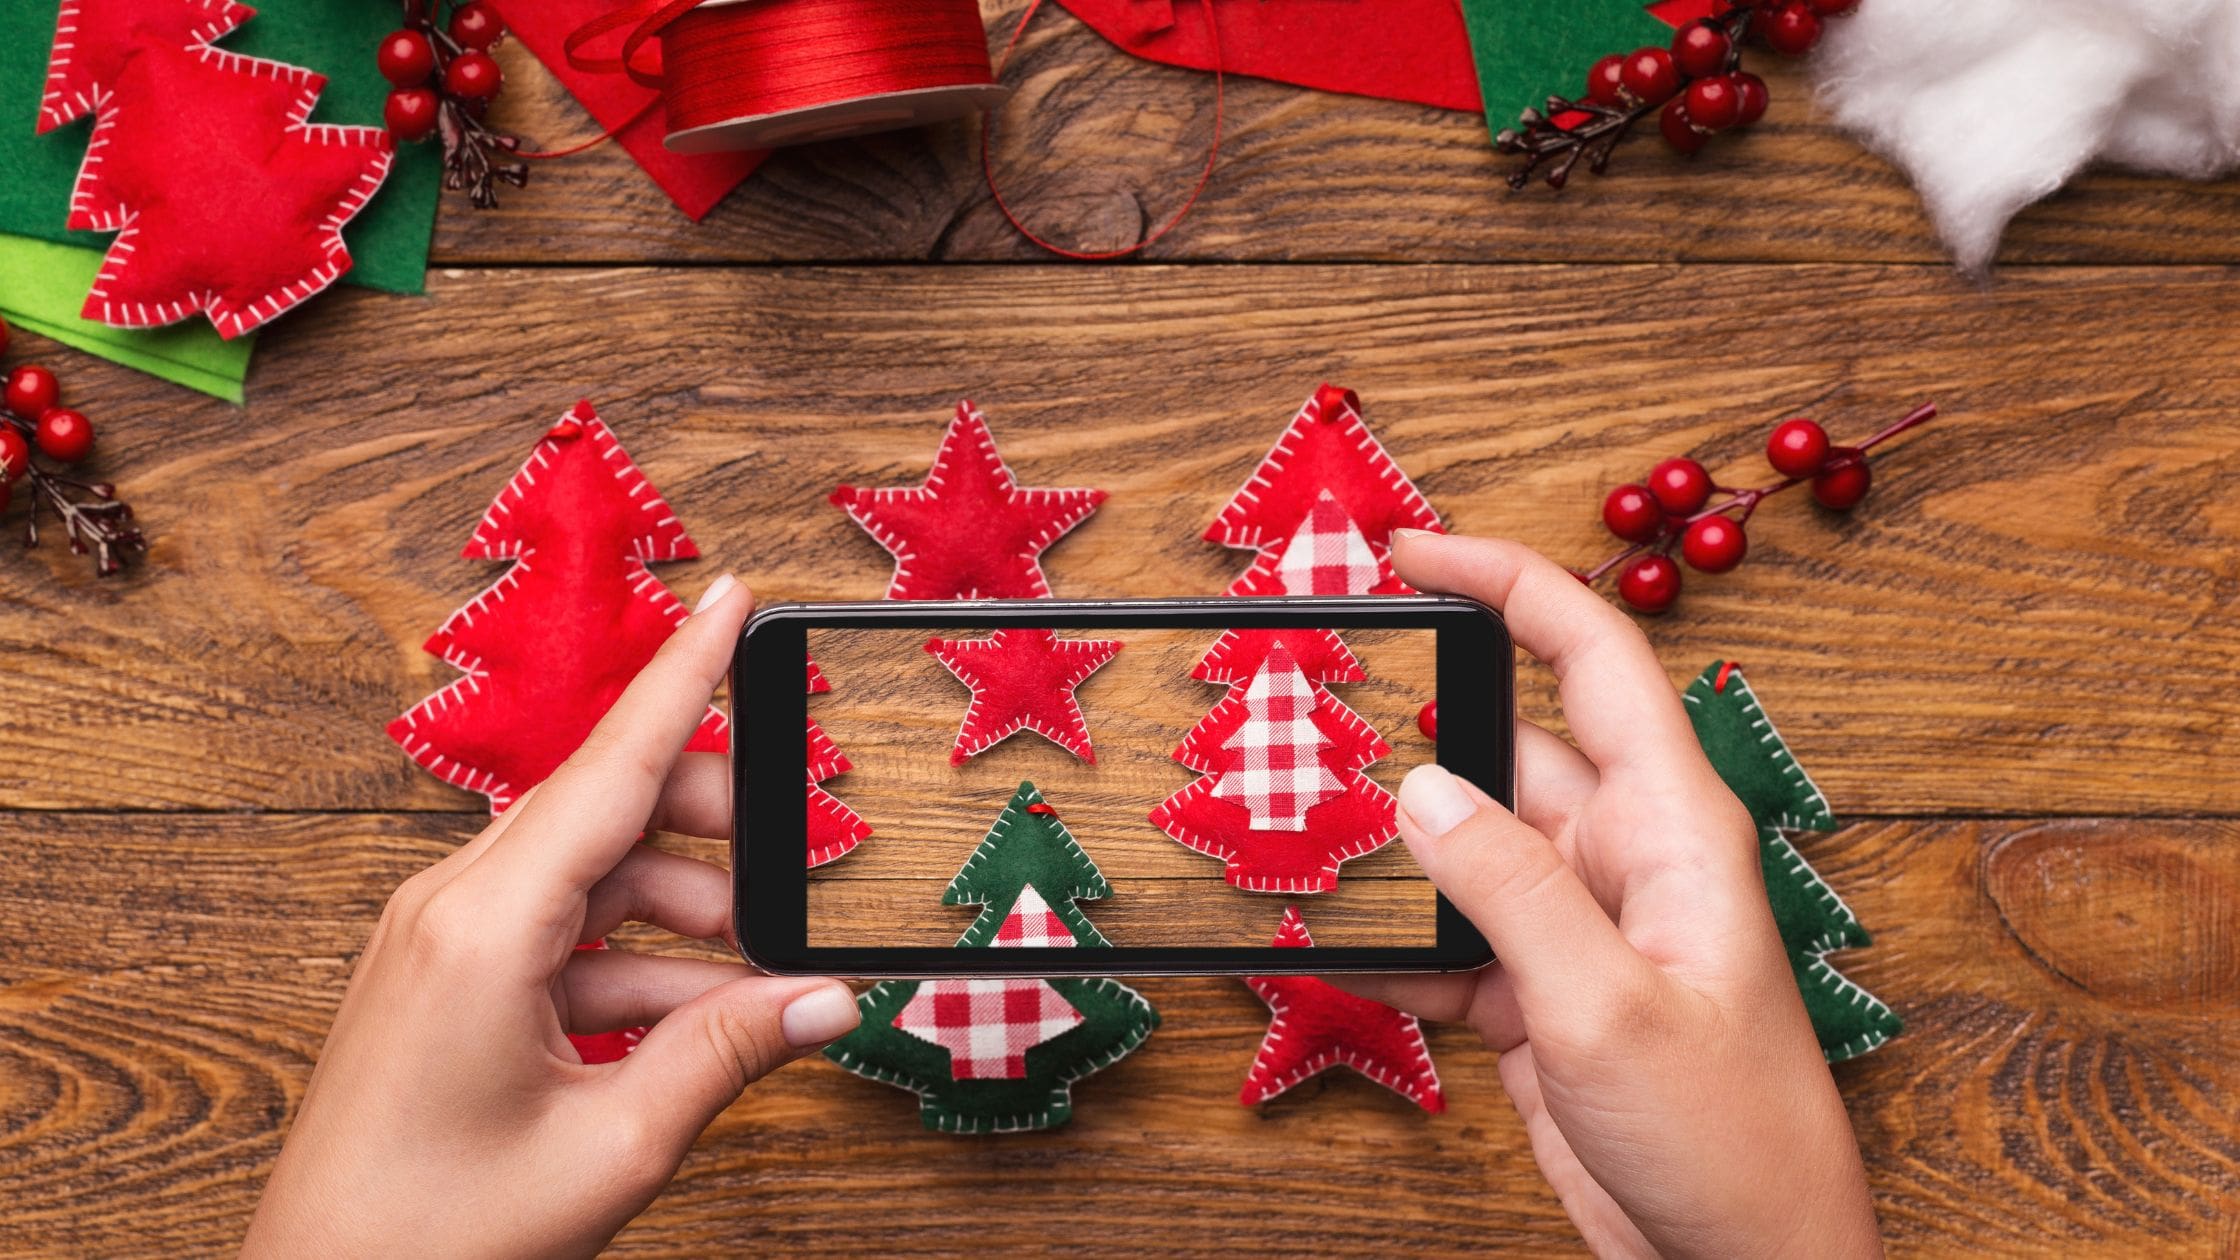 
			Preparing Your Digital Marketing Efforts for the Holiday Season